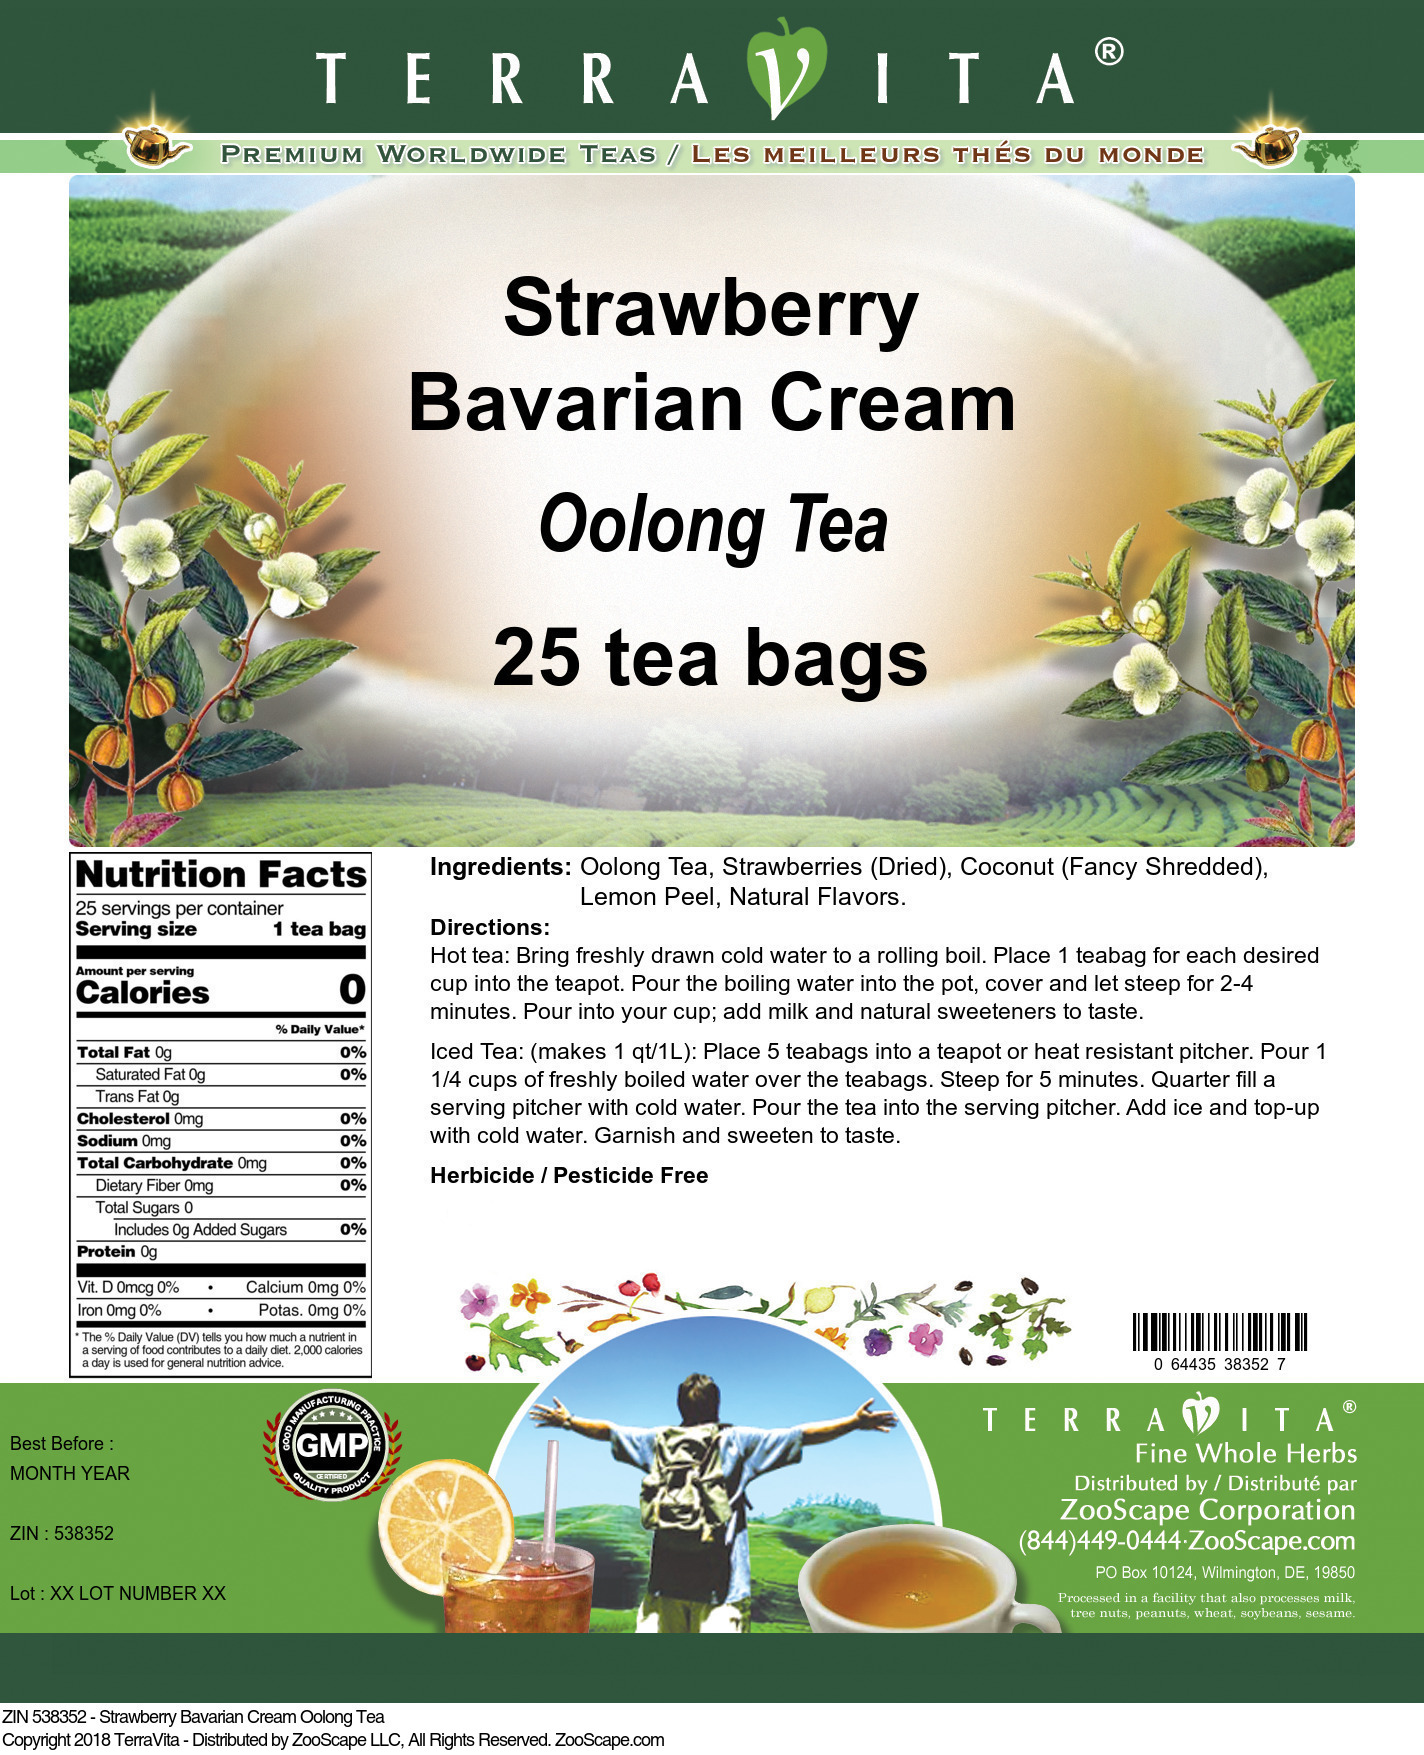 Strawberry Bavarian Cream Oolong Tea - Label